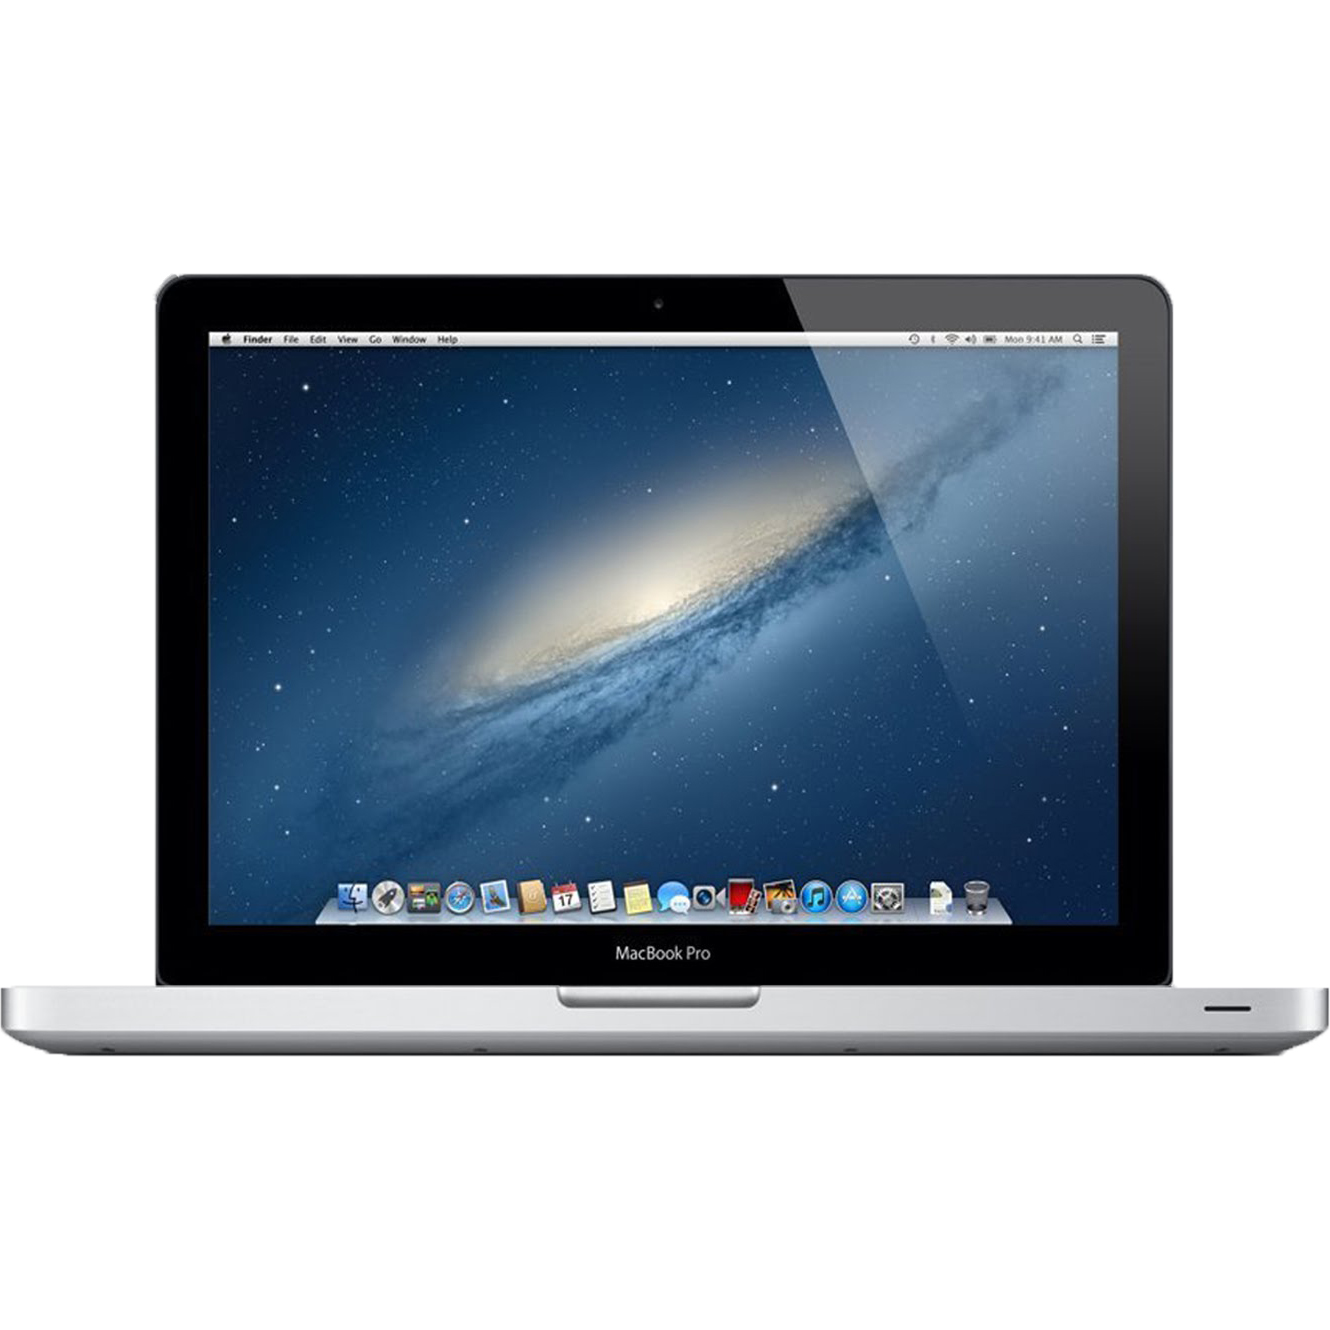 Restored Apple MacBook Pro Laptop, 13.3", Intel Core i5-3210M, 8GB RAM, 500GB HD, DVD-RW, Mac OS X 10.13.6 High Sierra, Silver, MD102LL/A (Refurbished) - image 1 of 4